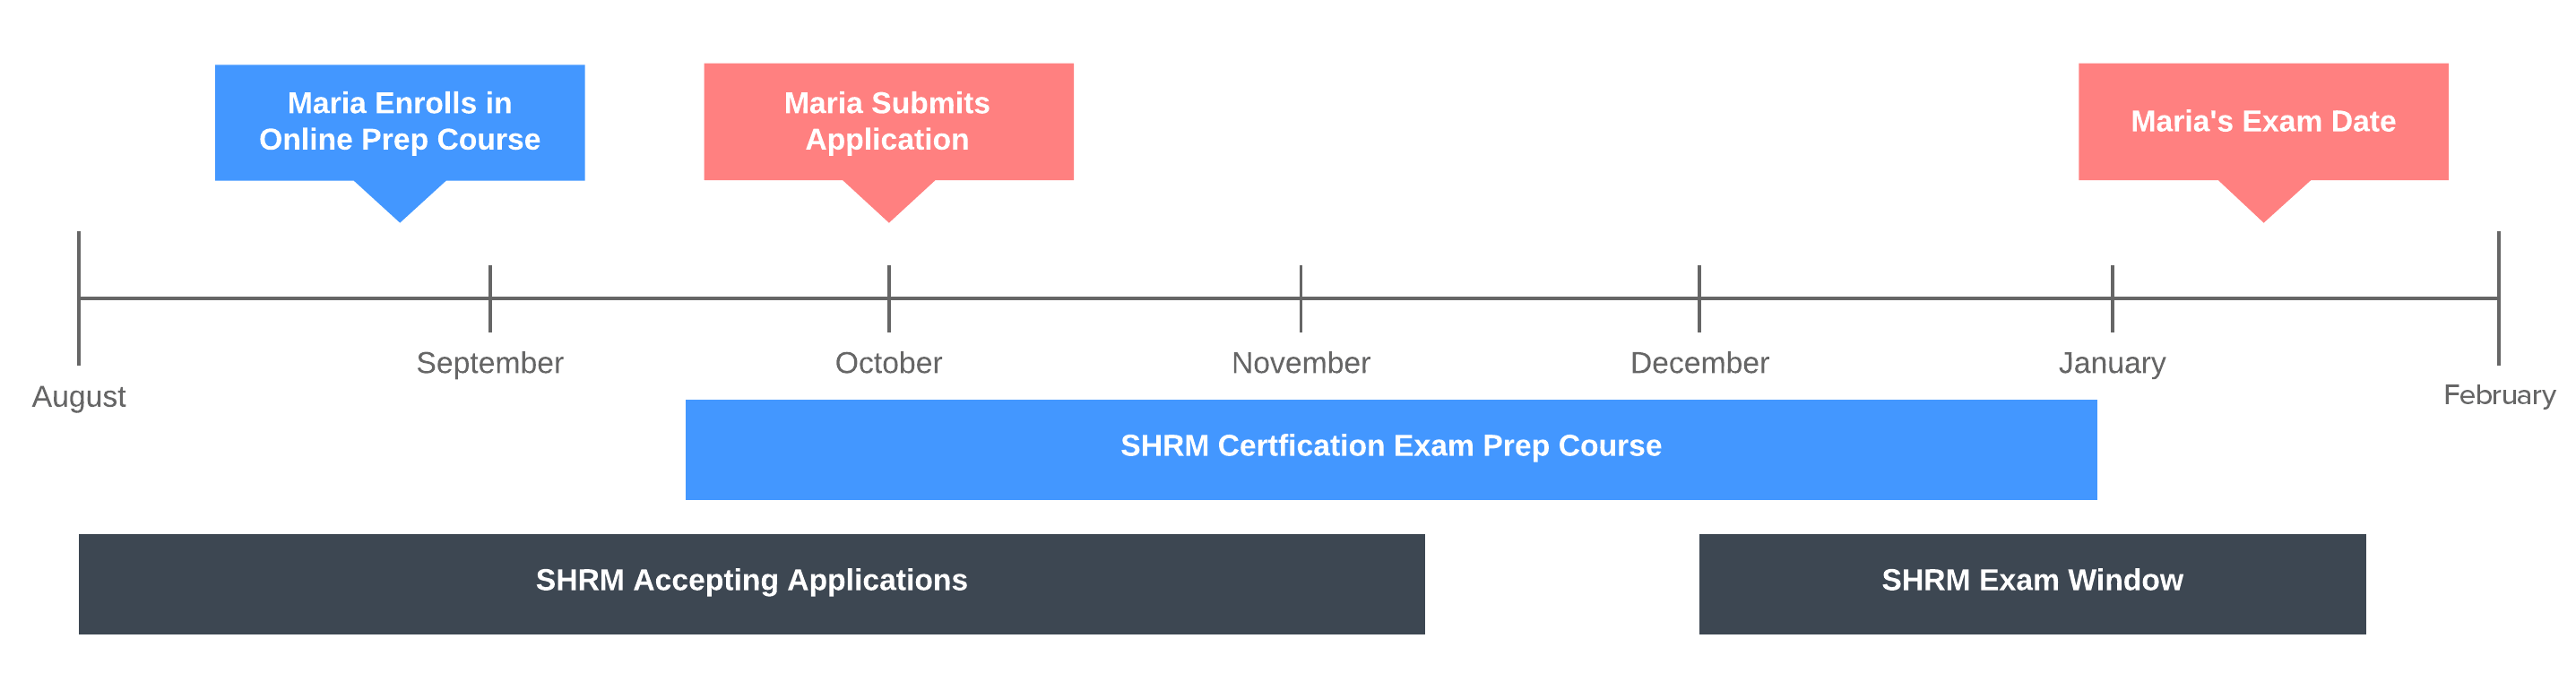 Timeline for SHRM Certification Exam